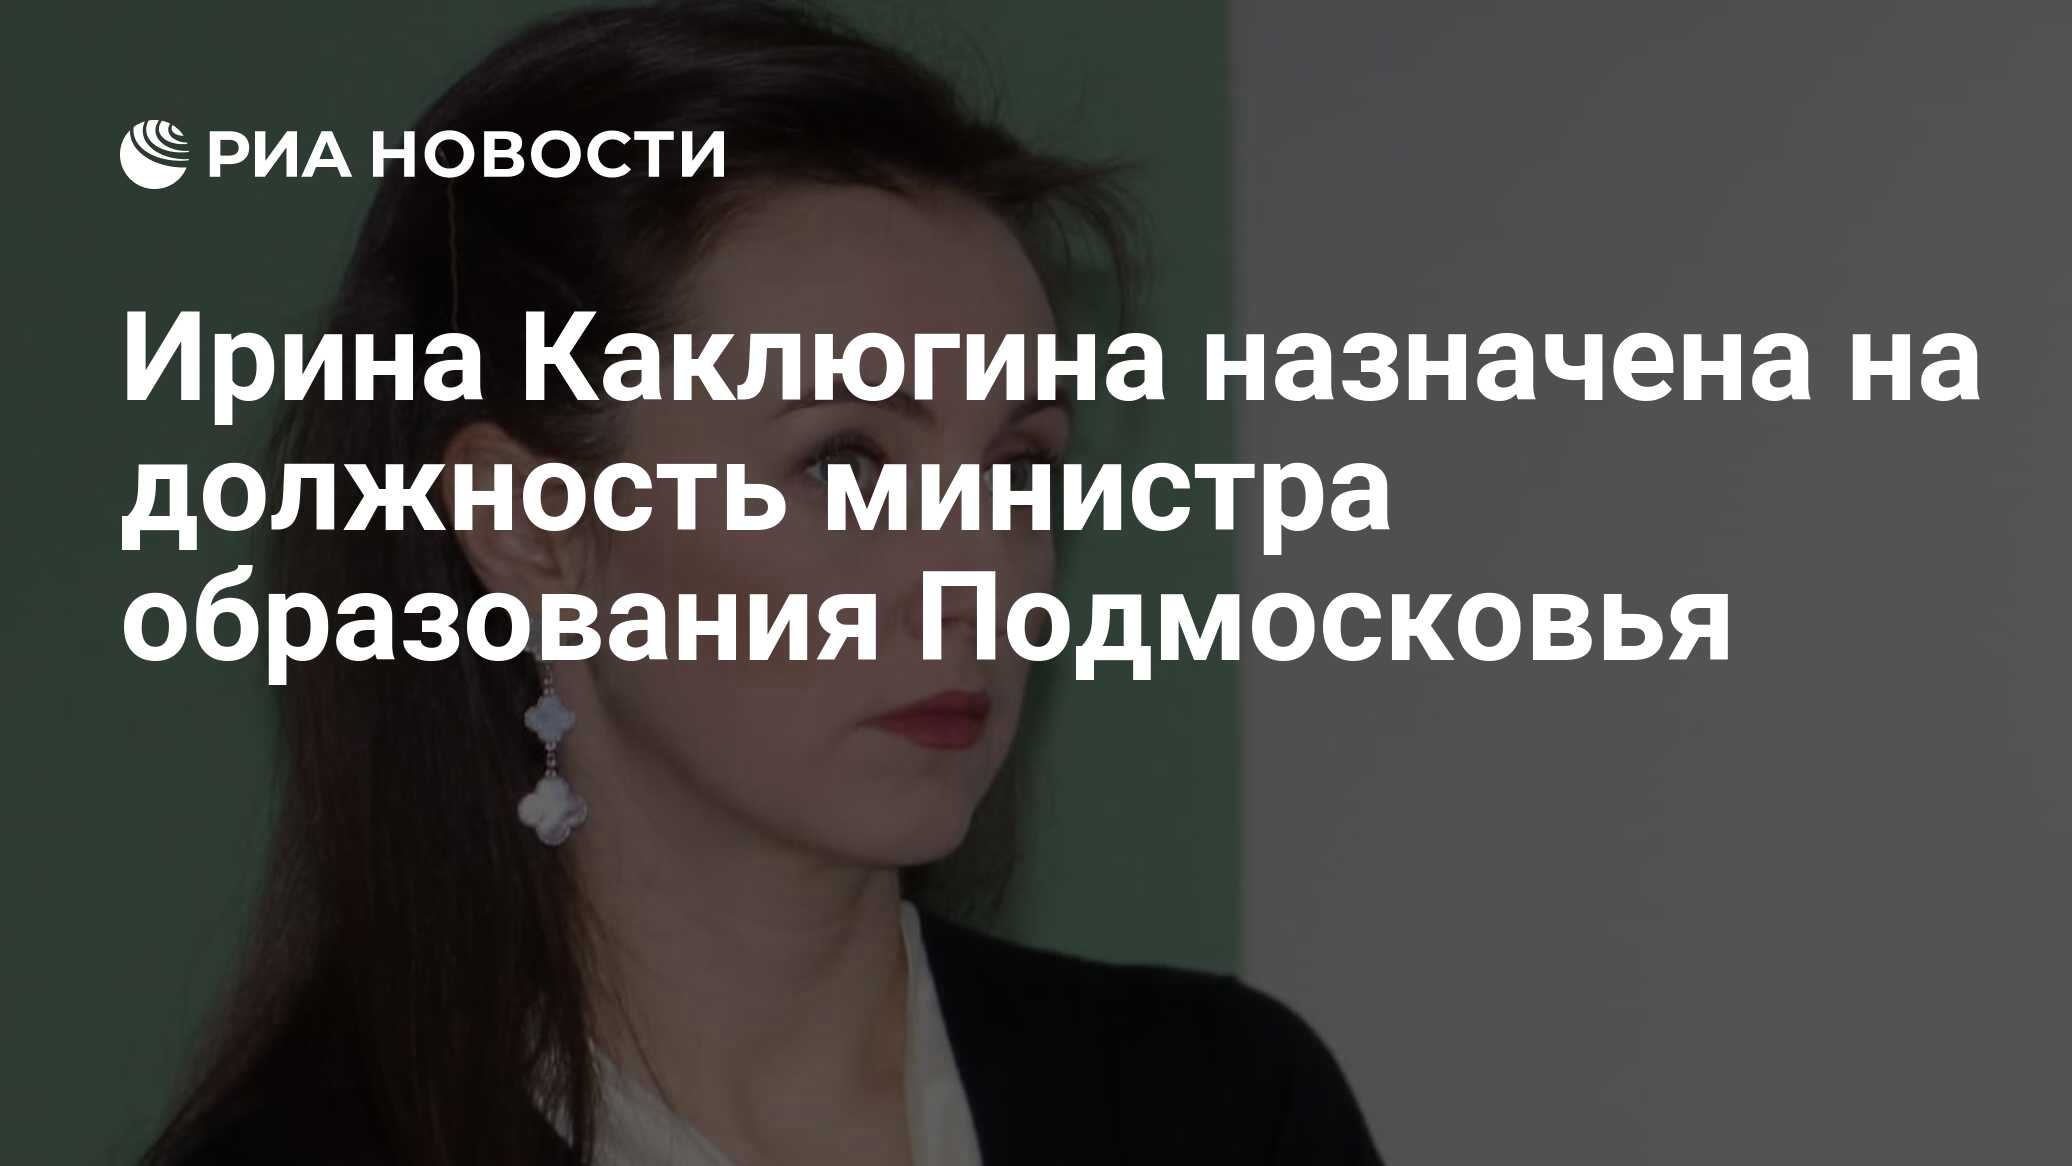 Каклюгина Ирина Александровна заместитель министра образования